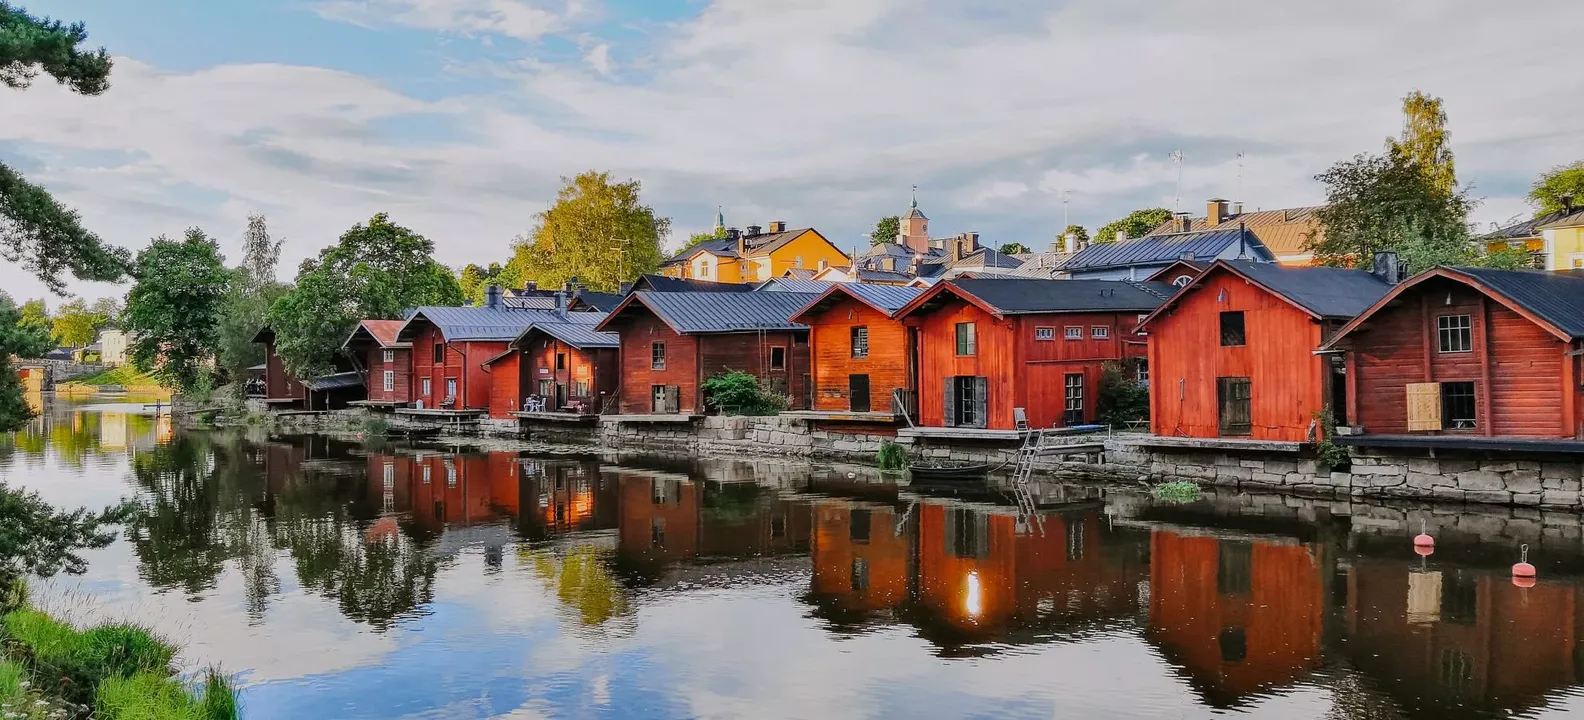 Porvoo | Uusimaa Region, Finland - Rated 3.1